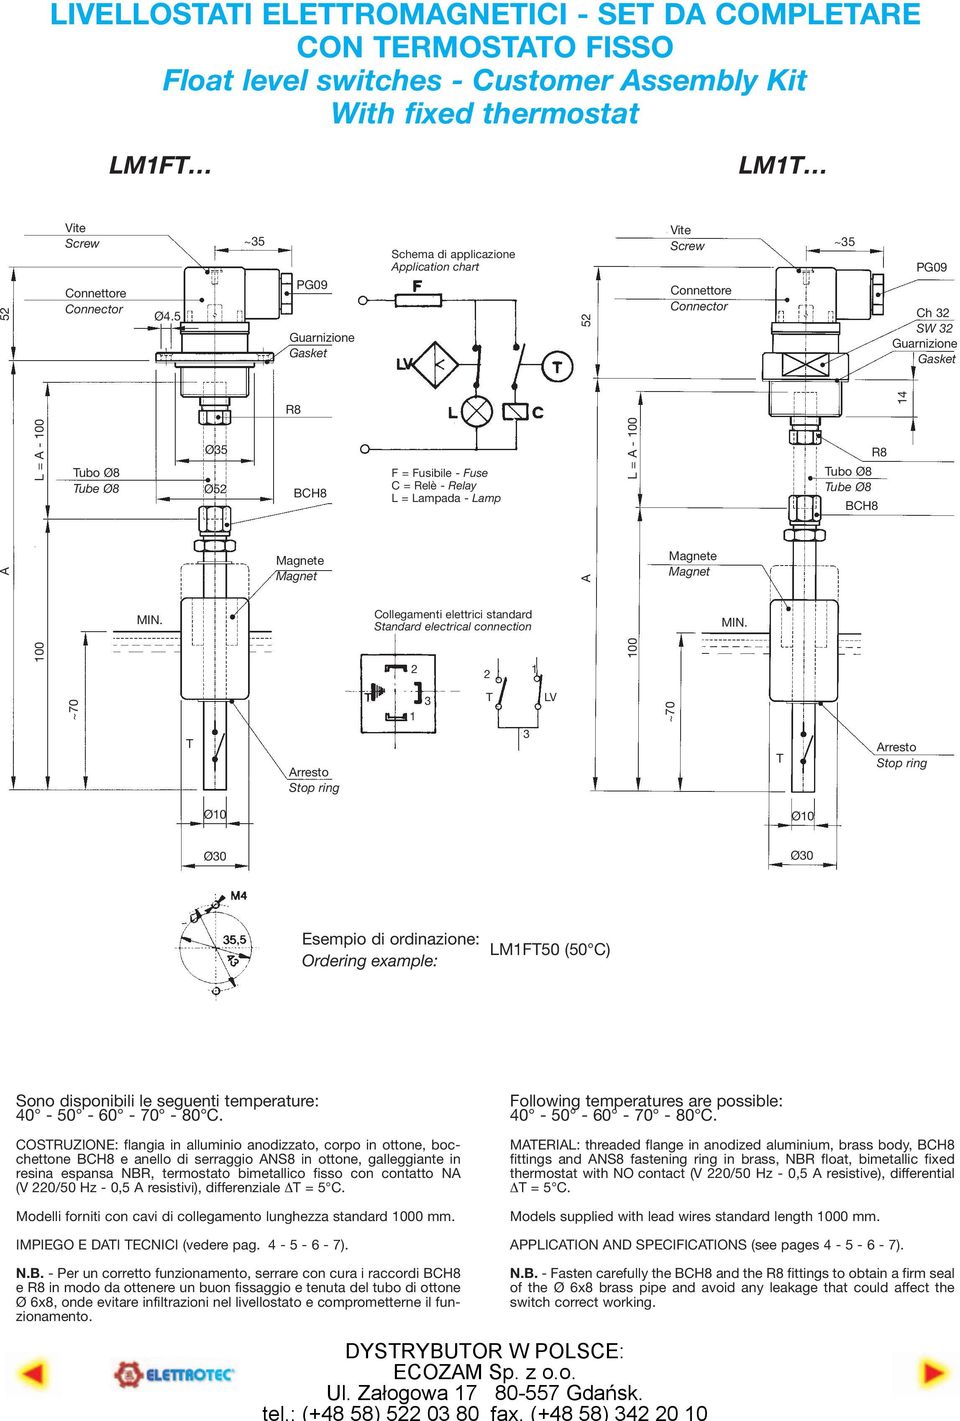 5 ~5 ~5 Schema di applicazione pplication chart 5 Ch SW R8 4 00 L = - 00 Tubo Ø8 Tube Ø8 Ø5 Ø5 CH8 e F = Fusibile - Fuse C = Relè - Relay L = Lampada - Lamp Collegamenti elettrici standard Standard